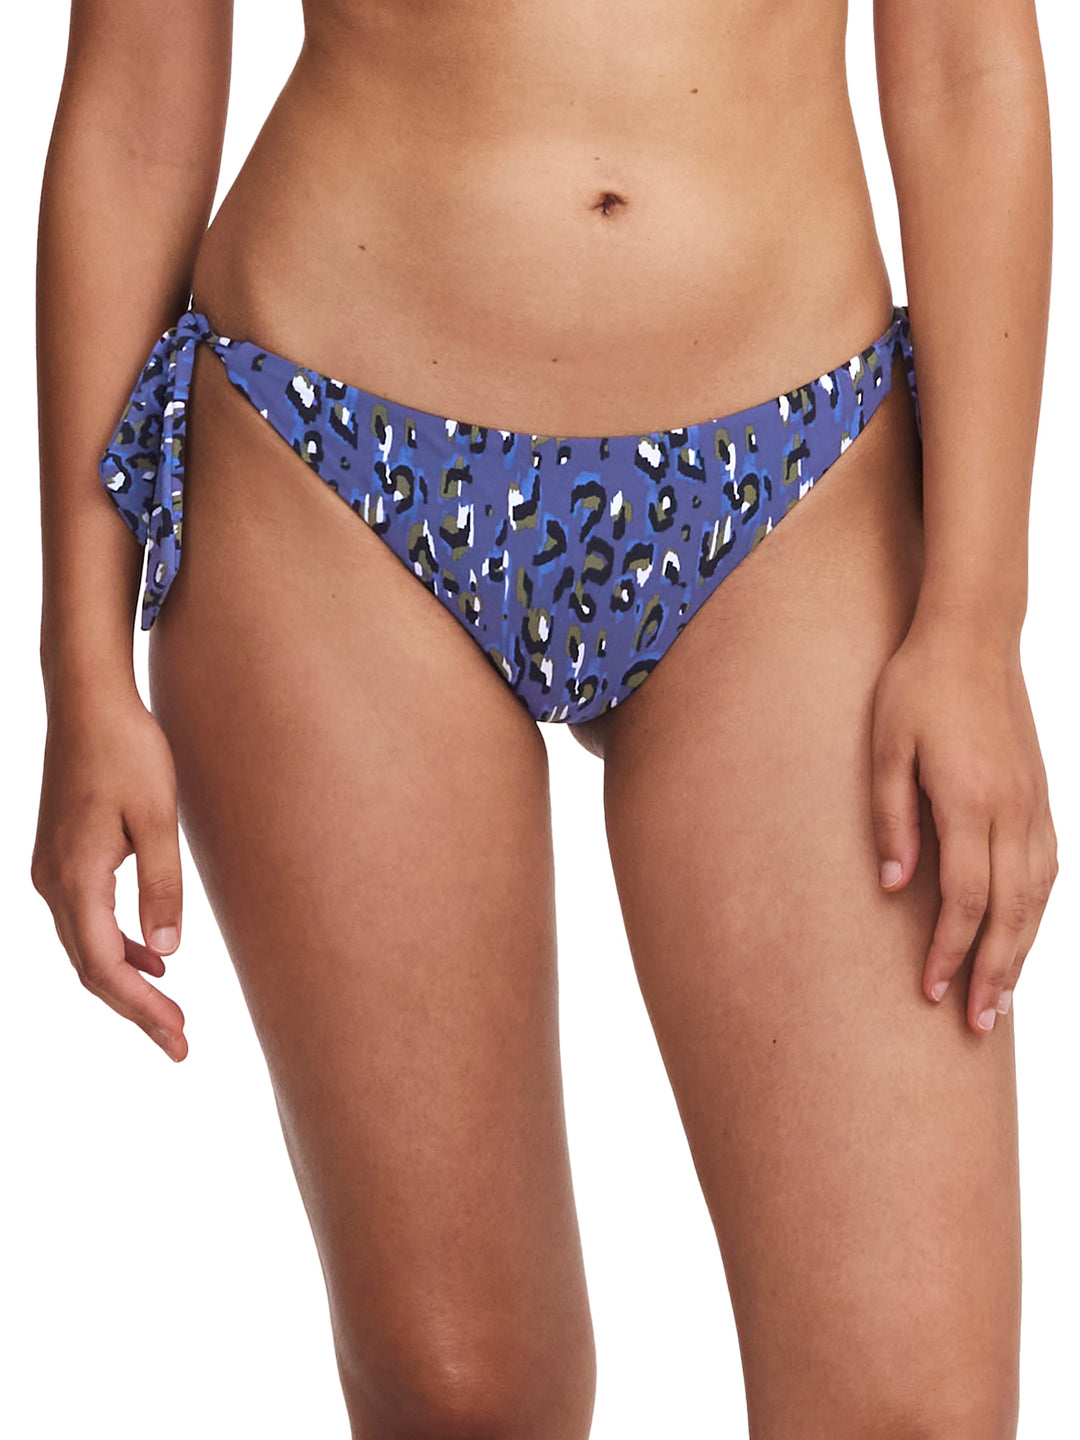 Chantelle Swimwear Eos Bikini - Blue Leopard Full Cup Bikini Chantelle 